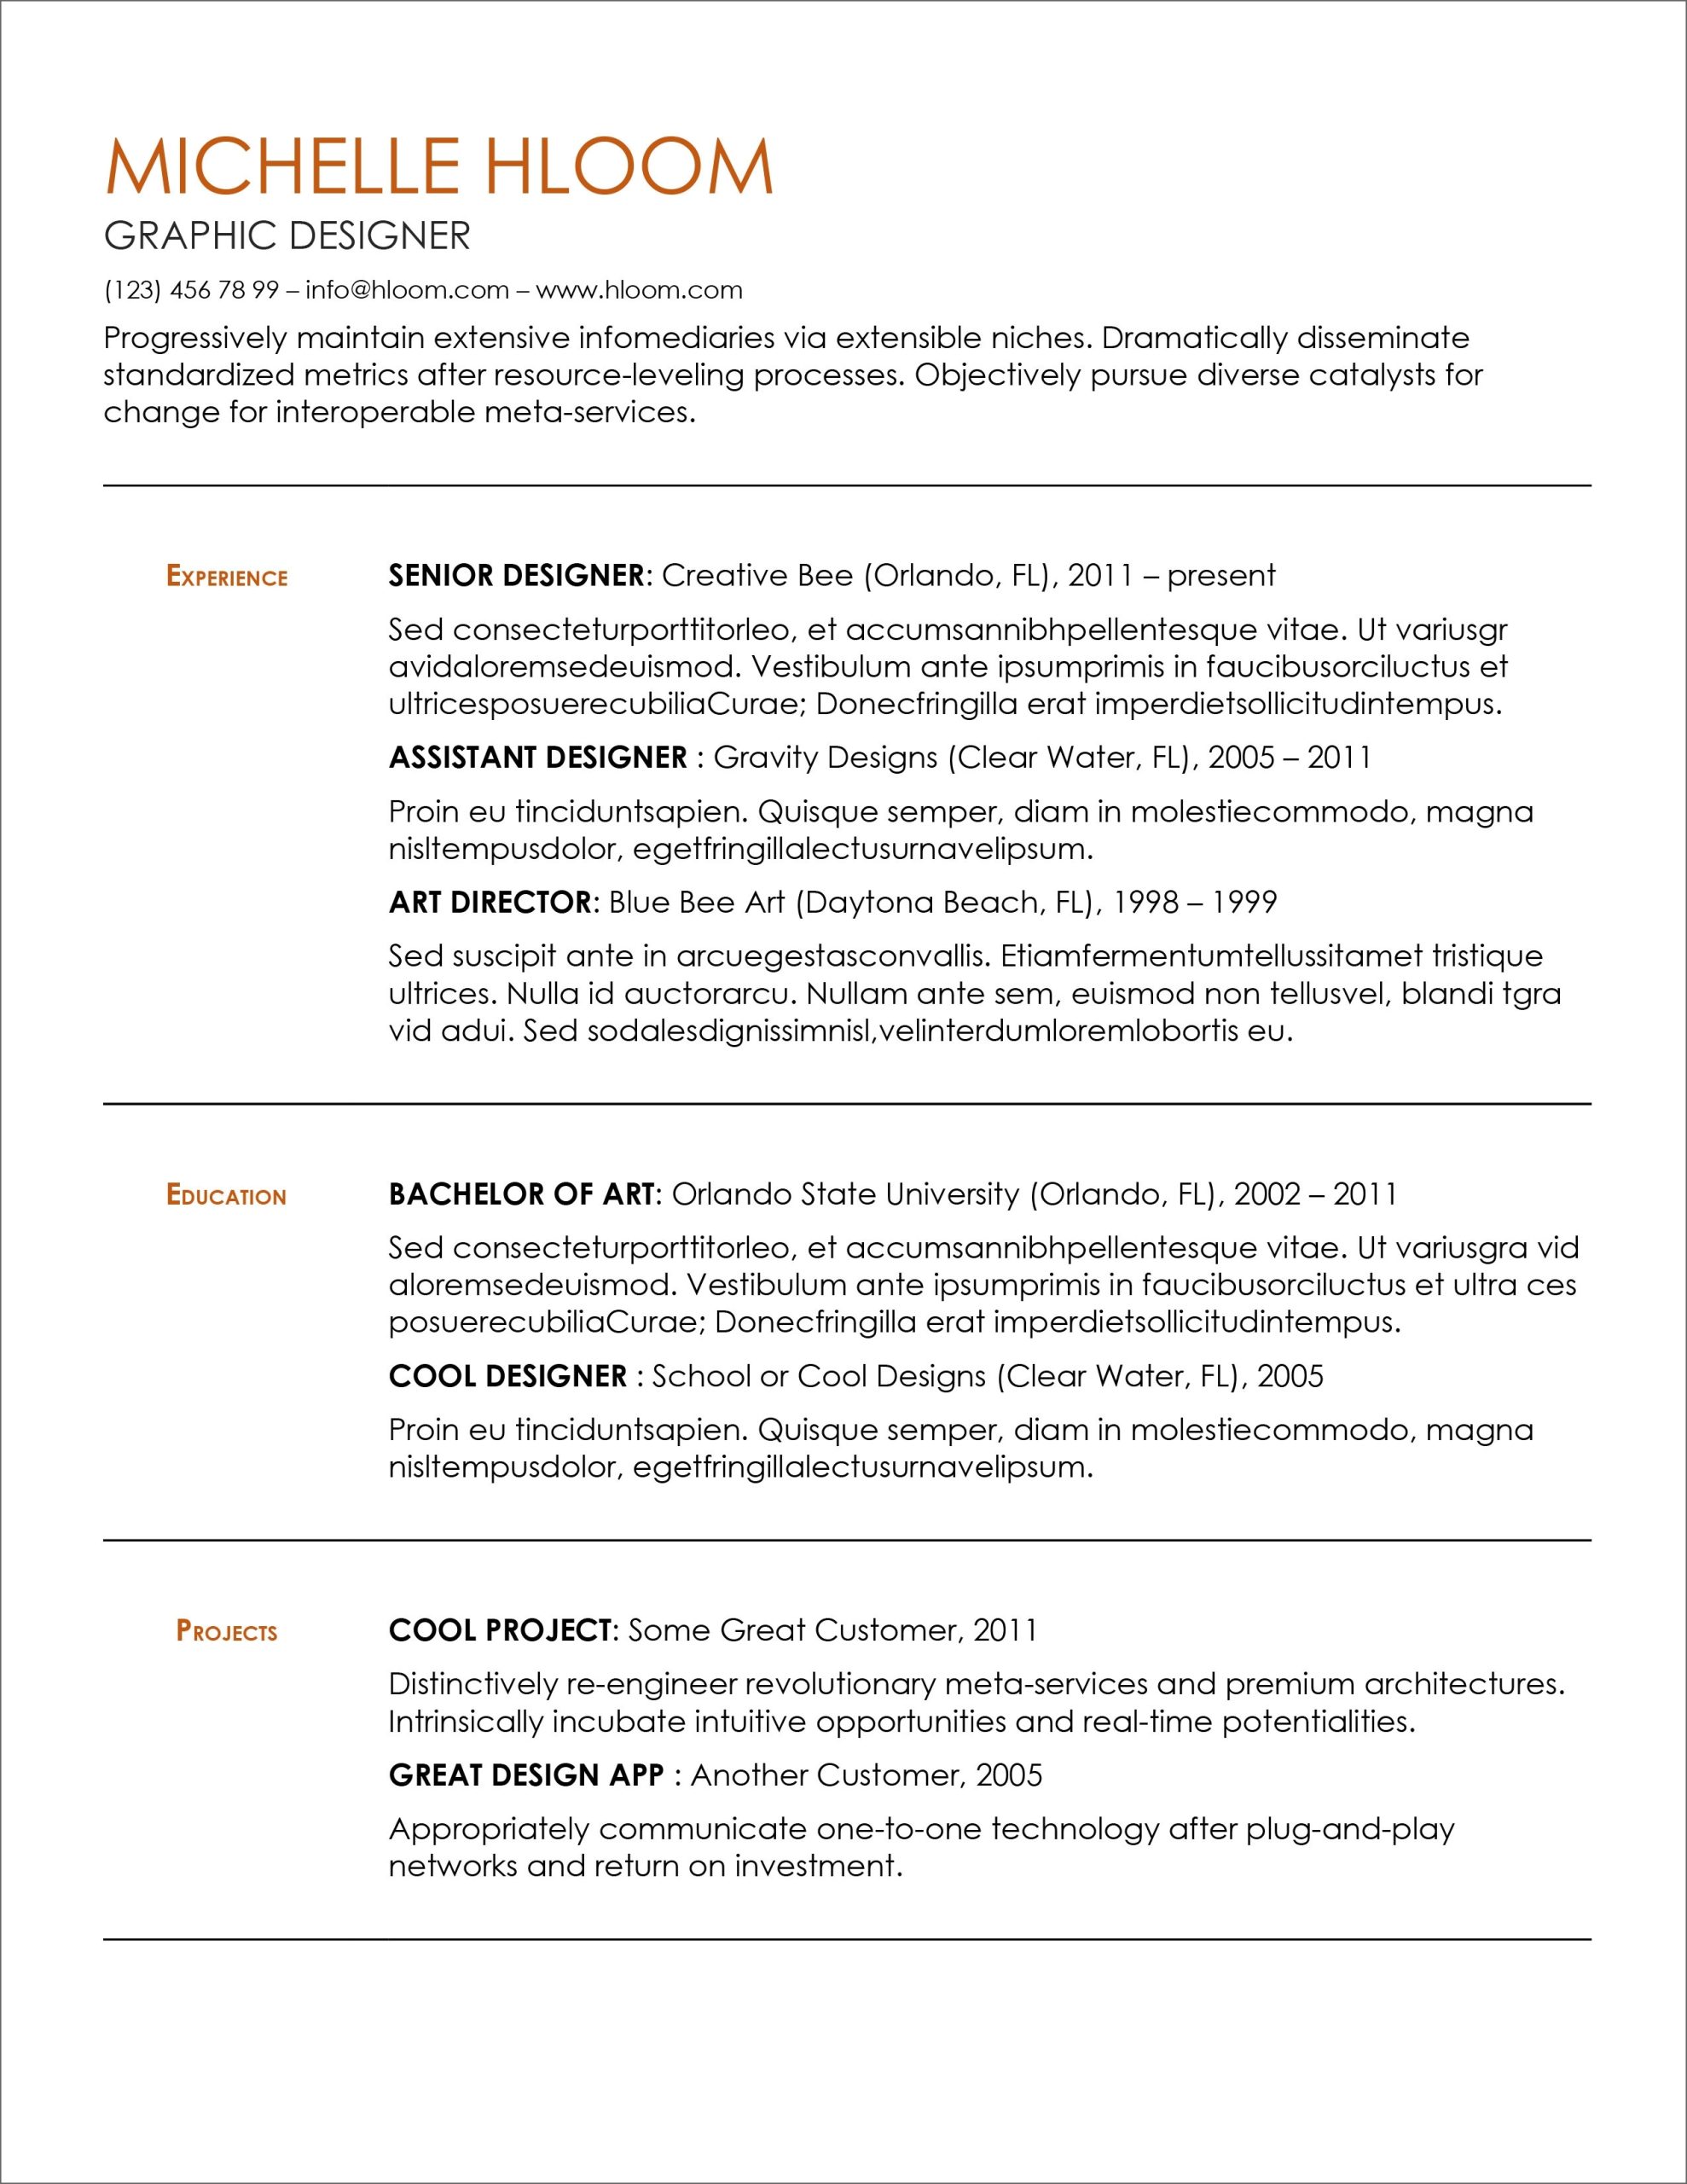 45 Free Modern Resume / Cv Templates - Minimalist, Simple & Clean Design In Free Resume Template Microsoft Word